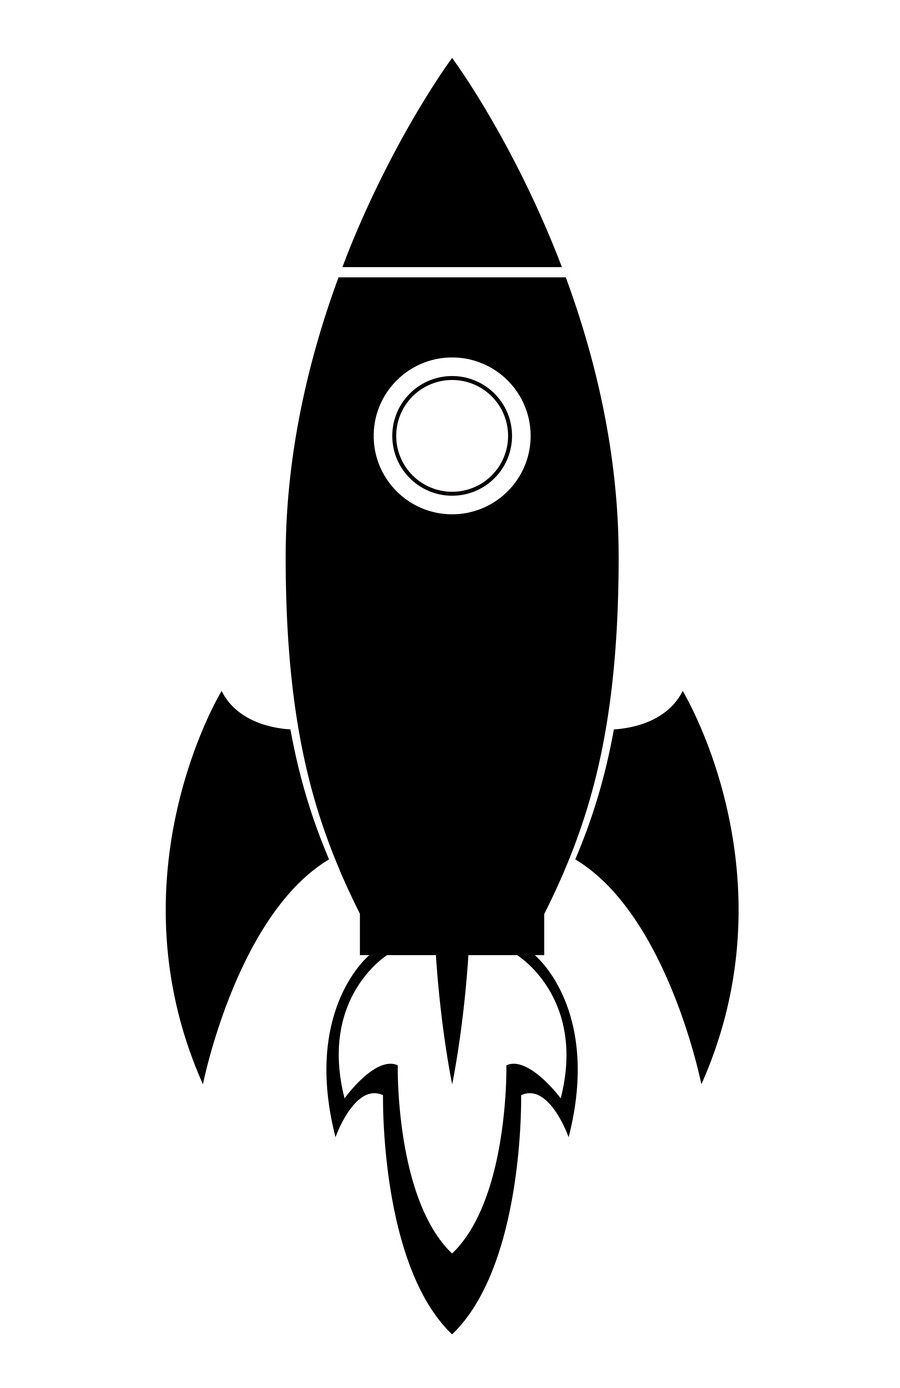 I need a drawing of a minimalist rocket ship design. | Freelancer